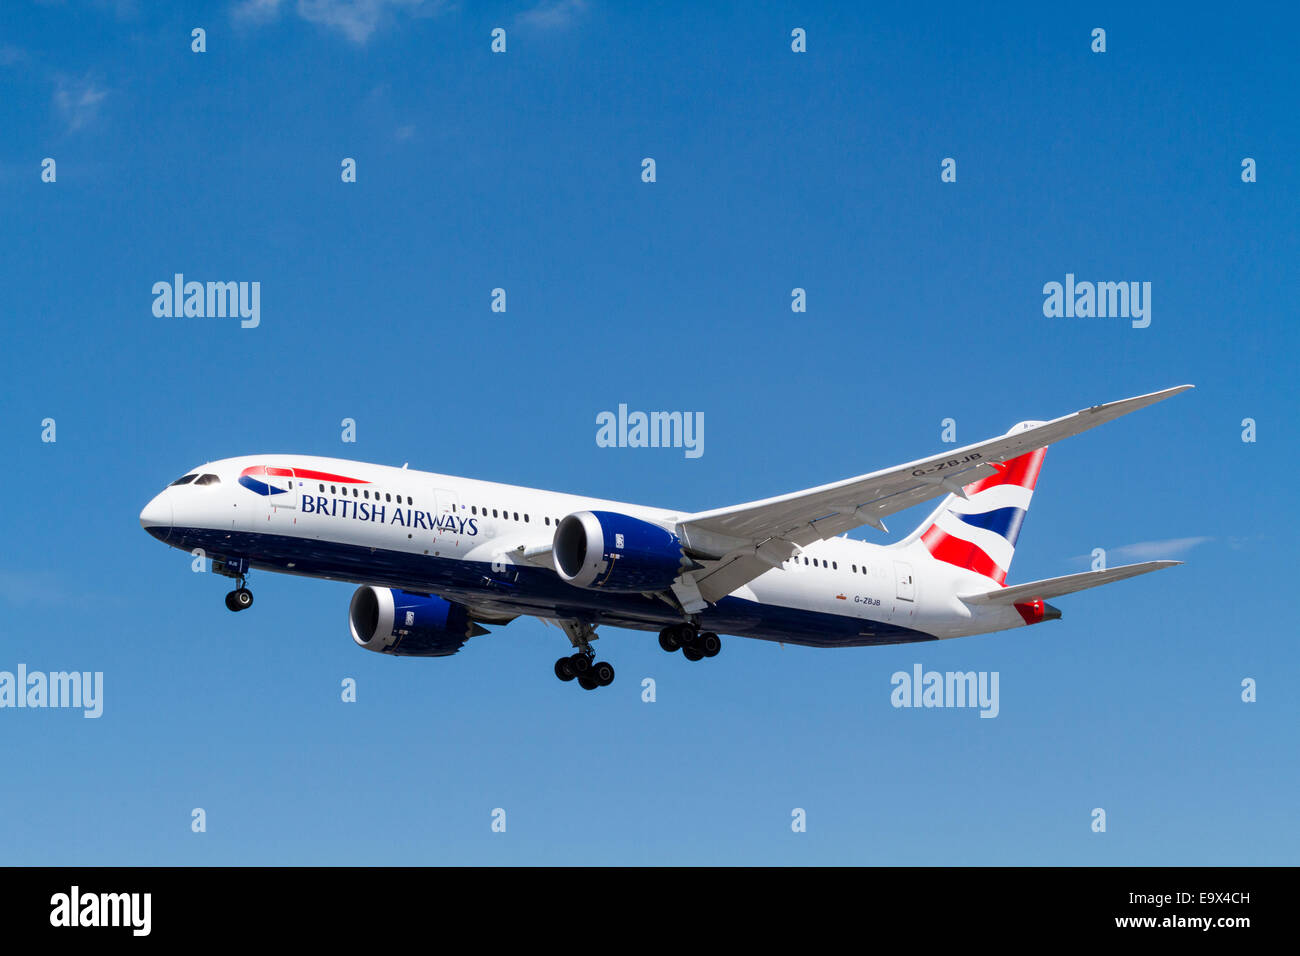 BA plane. British Airways Boeing 787 airplane, G-ZBJB, on landing approach at London Heathrow, England, UK Stock Photo